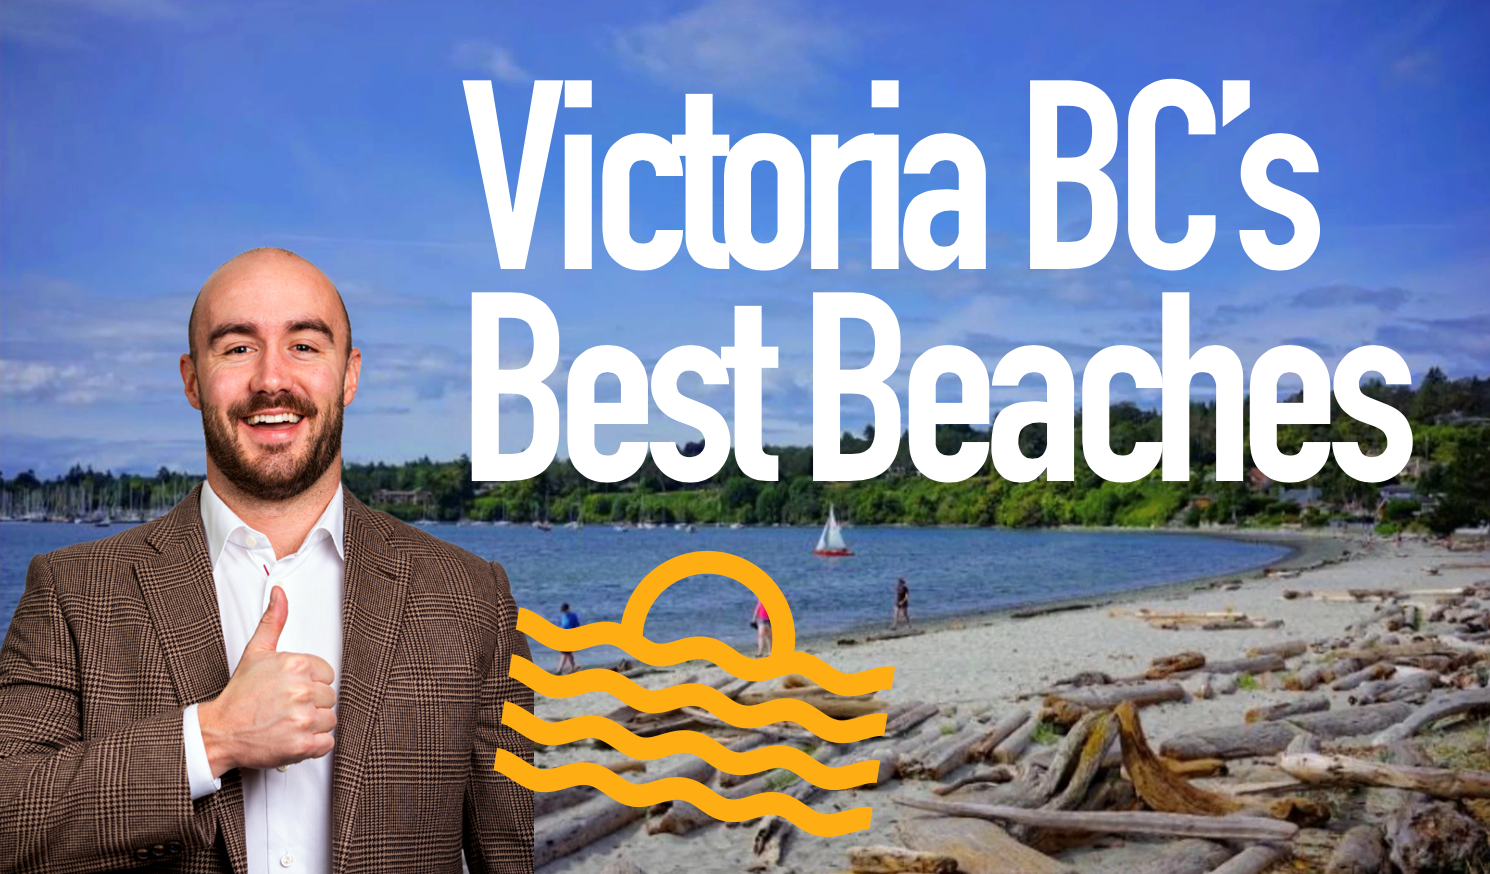 Victoria BC's Best Beaches